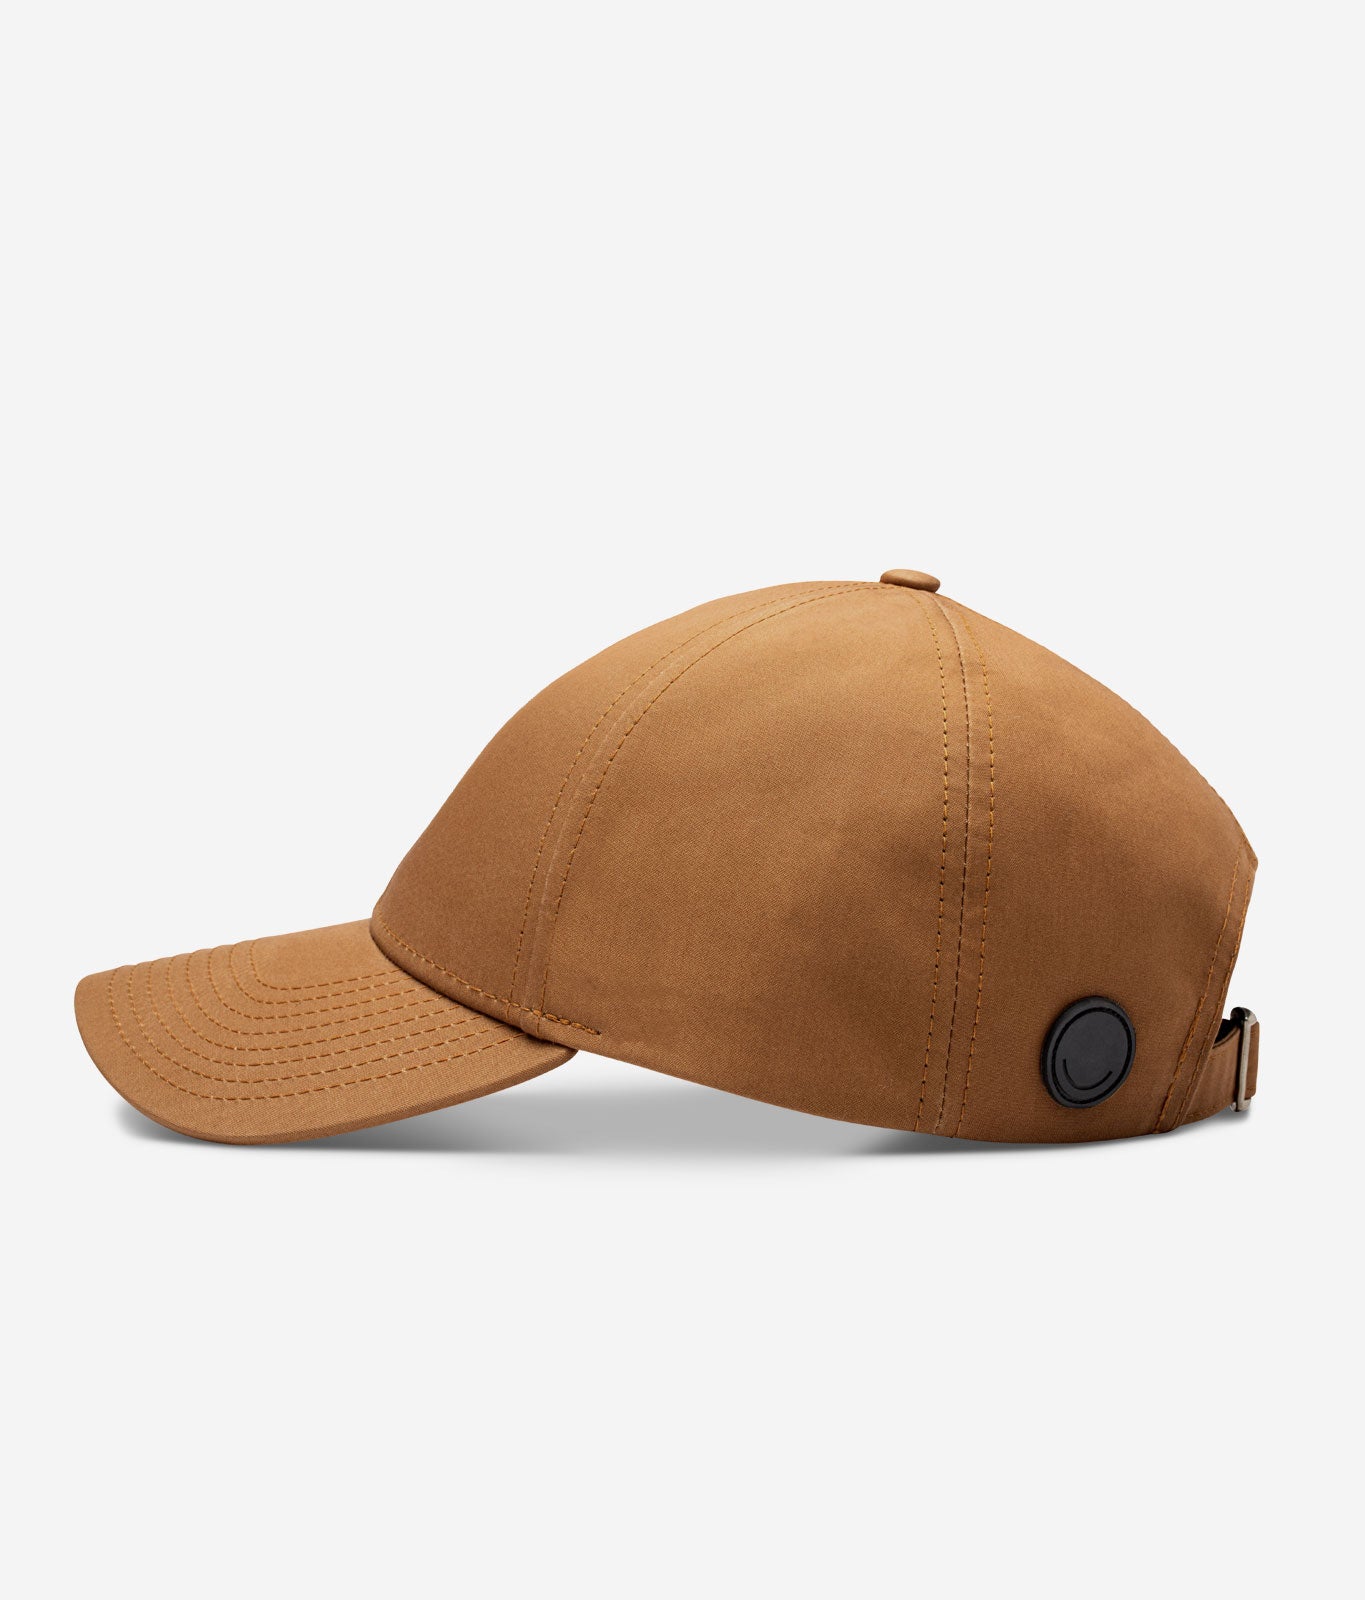 Stiksen, Premium baseball caps for men and women